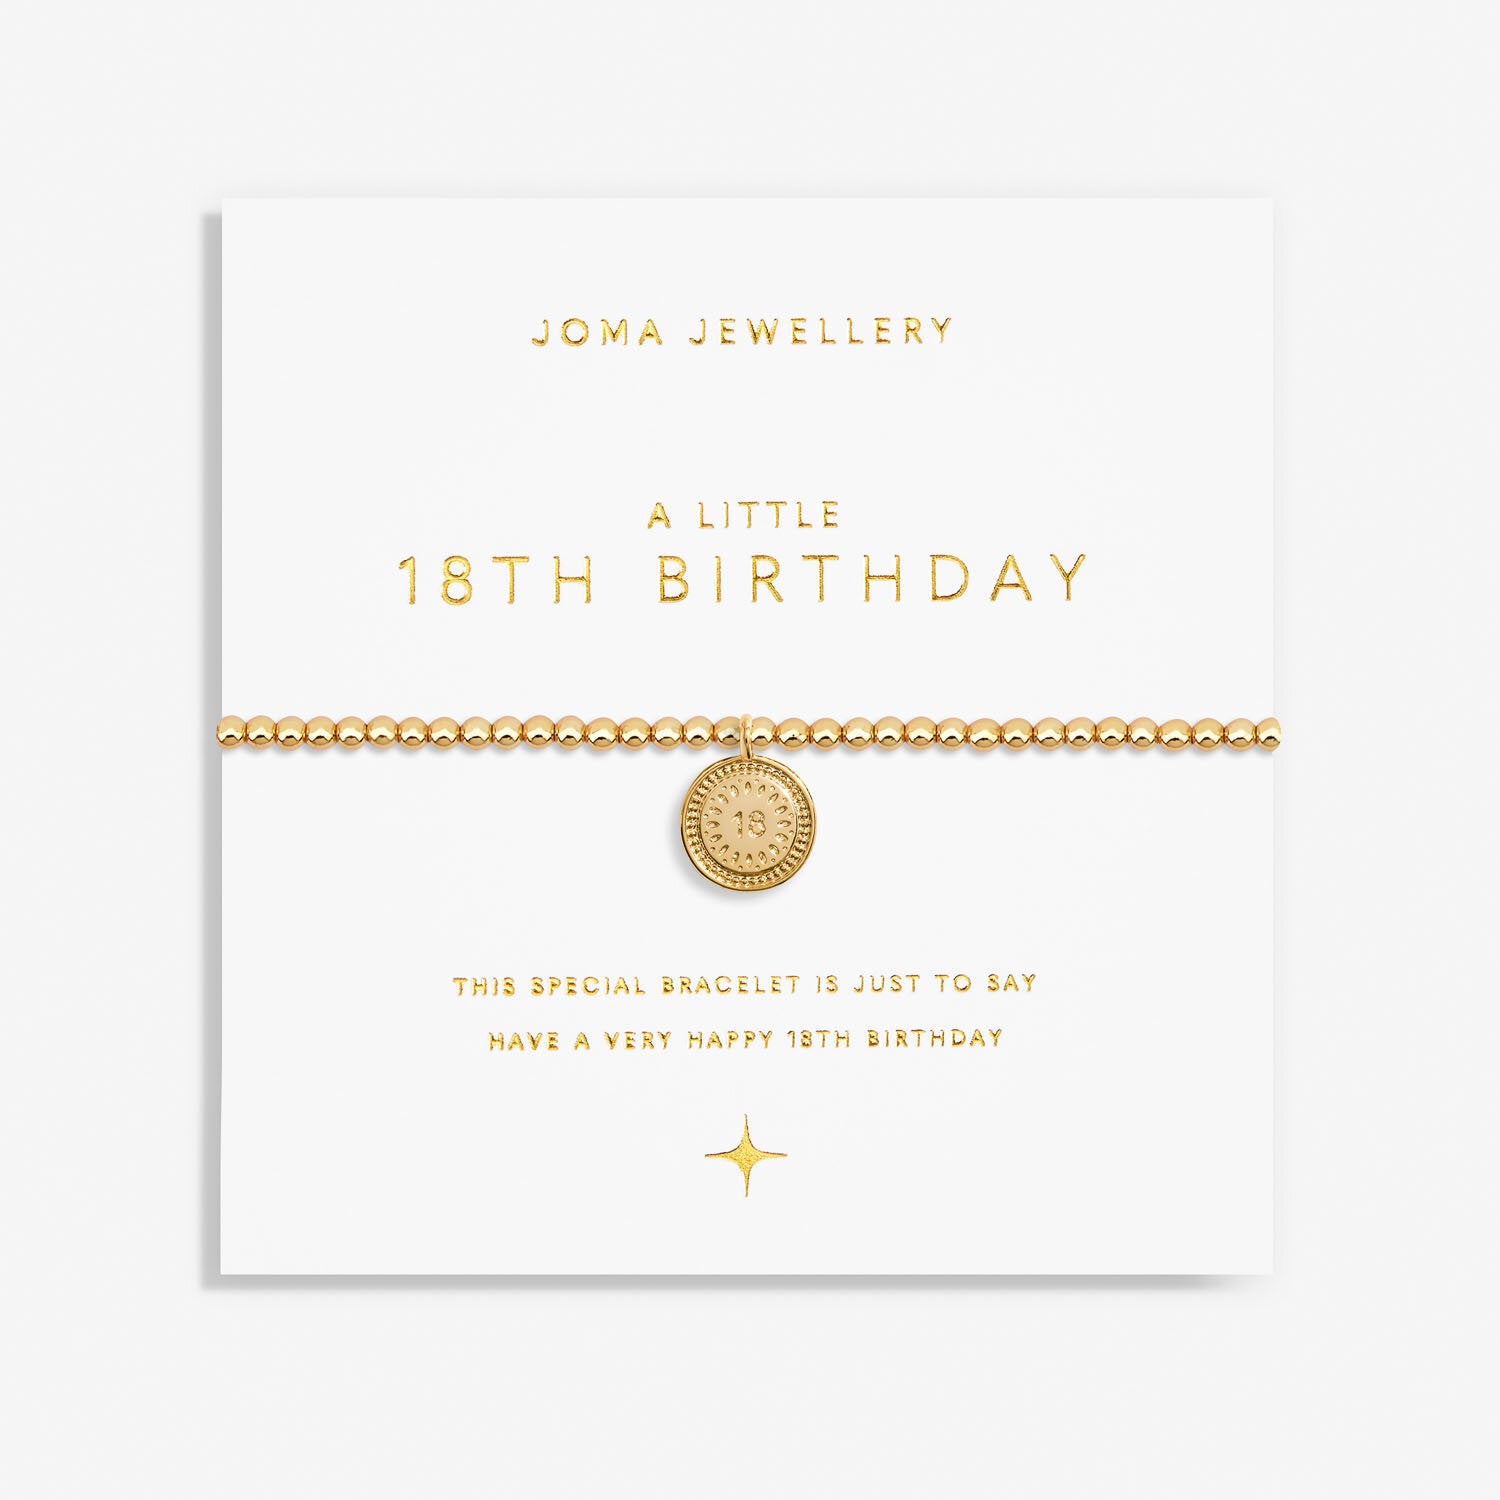 A Little '18th Birthday' Bracelet - Joma Jewellery